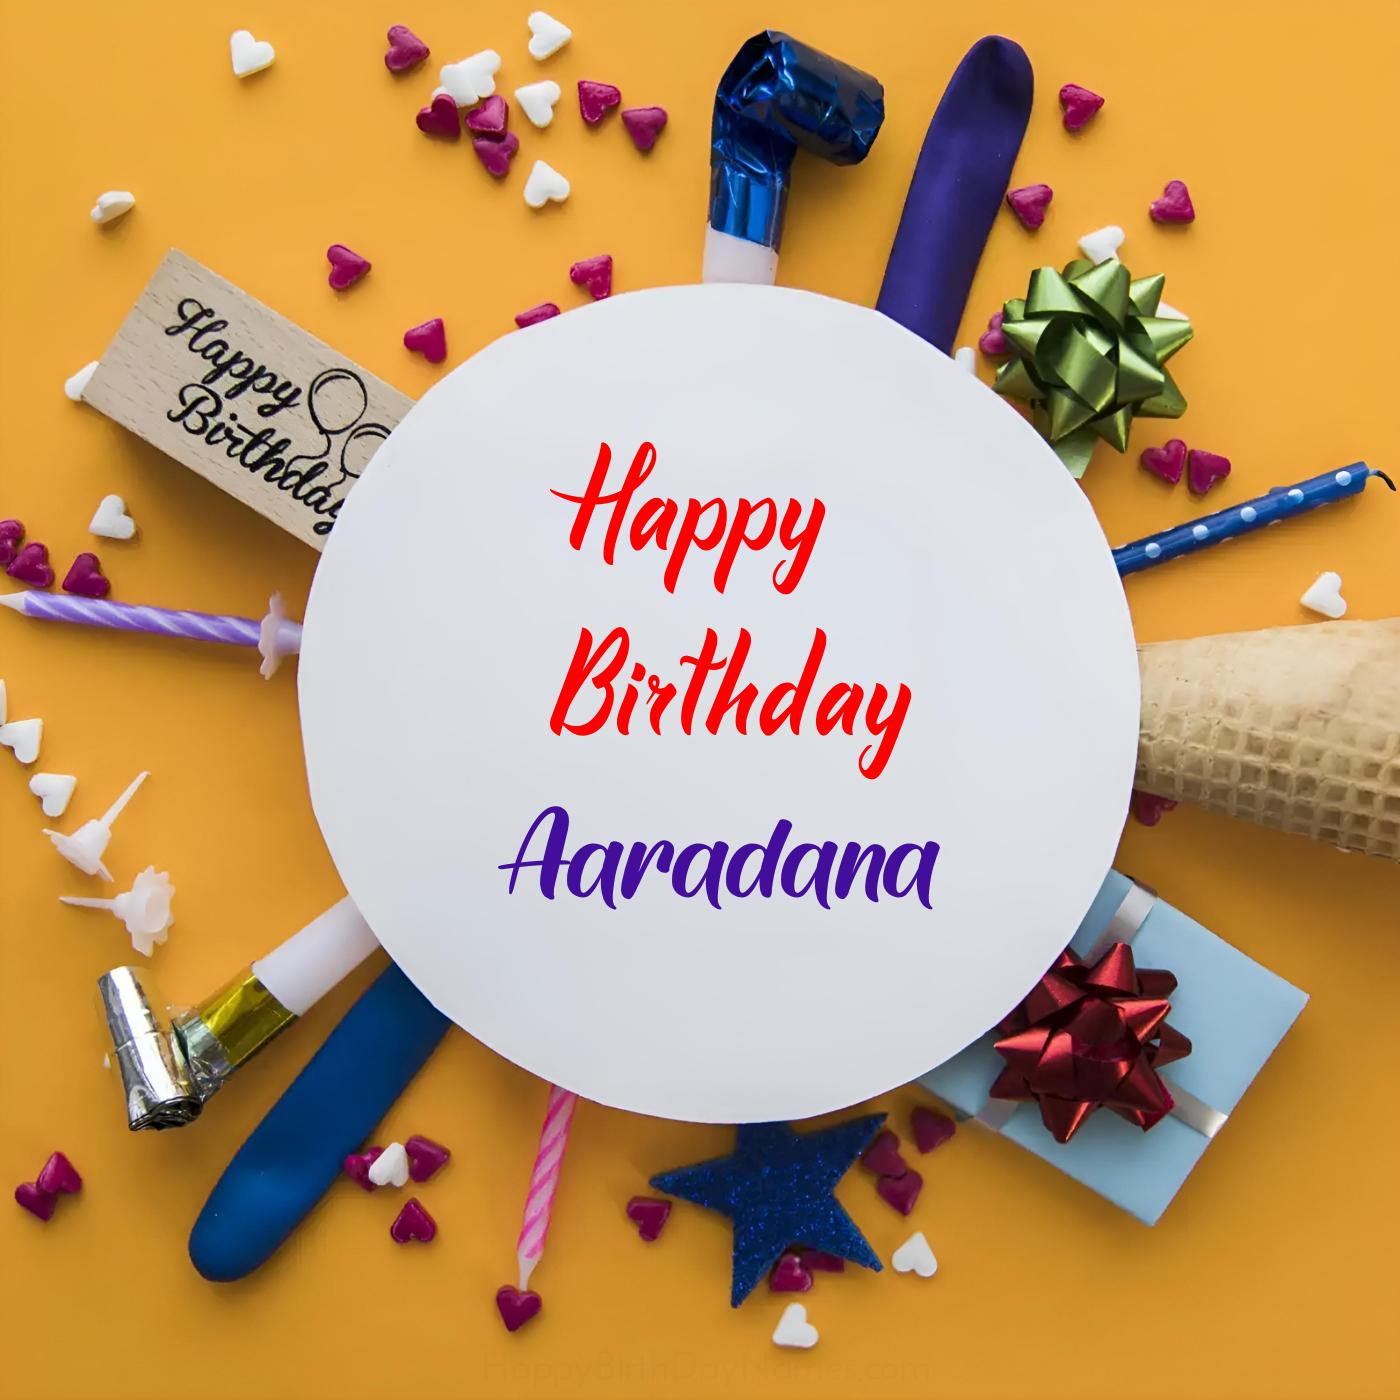 Happy Birthday Aaradana Round Frame Card